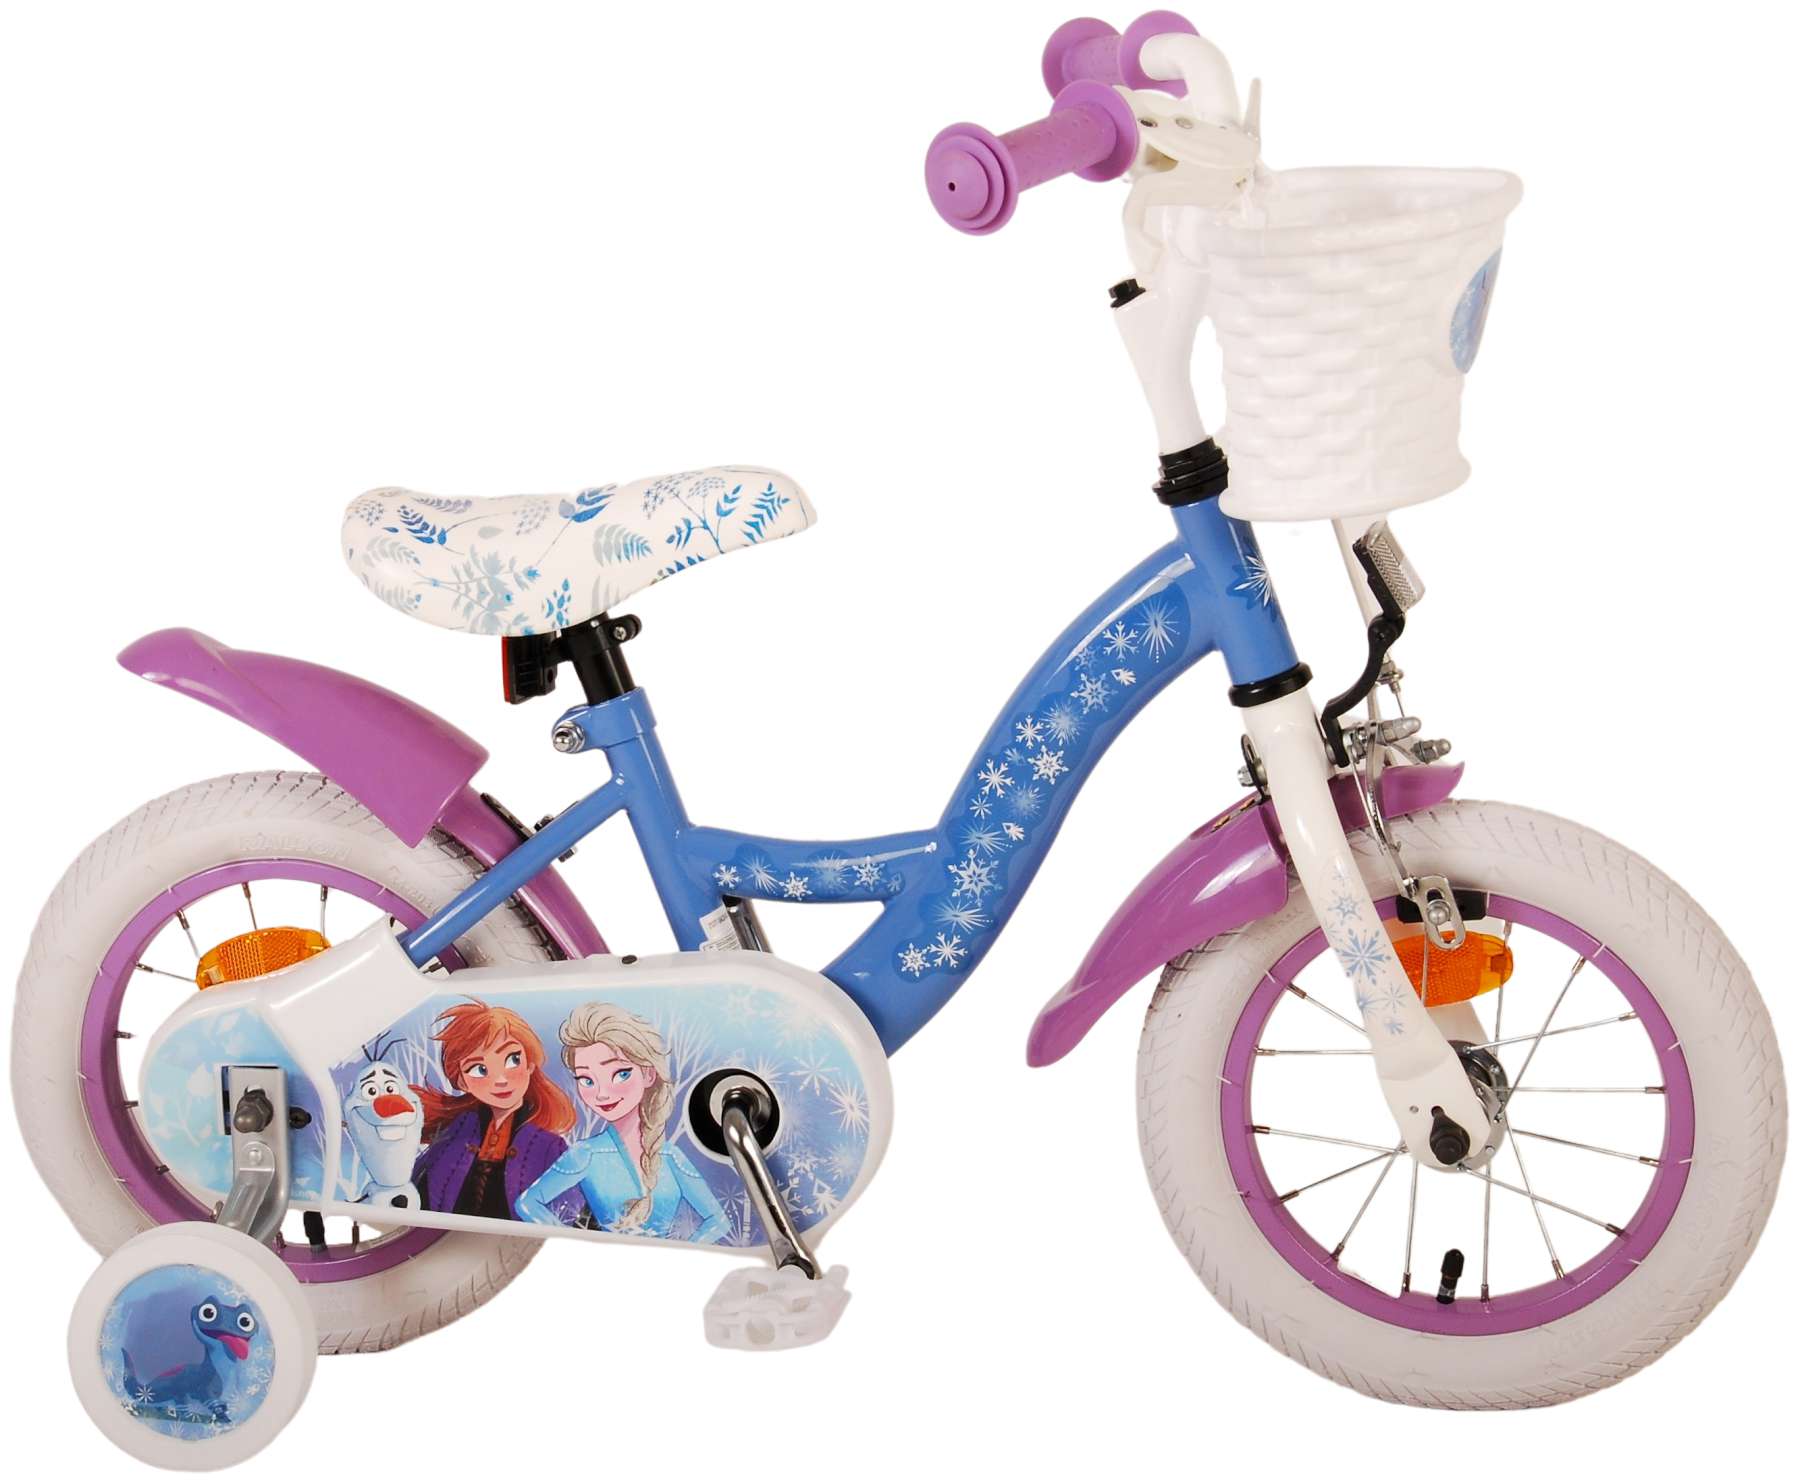 Kinderfahrrad Disney Frozen 2 für Mädchen 12 Zoll Kinderrad Blau/Lila